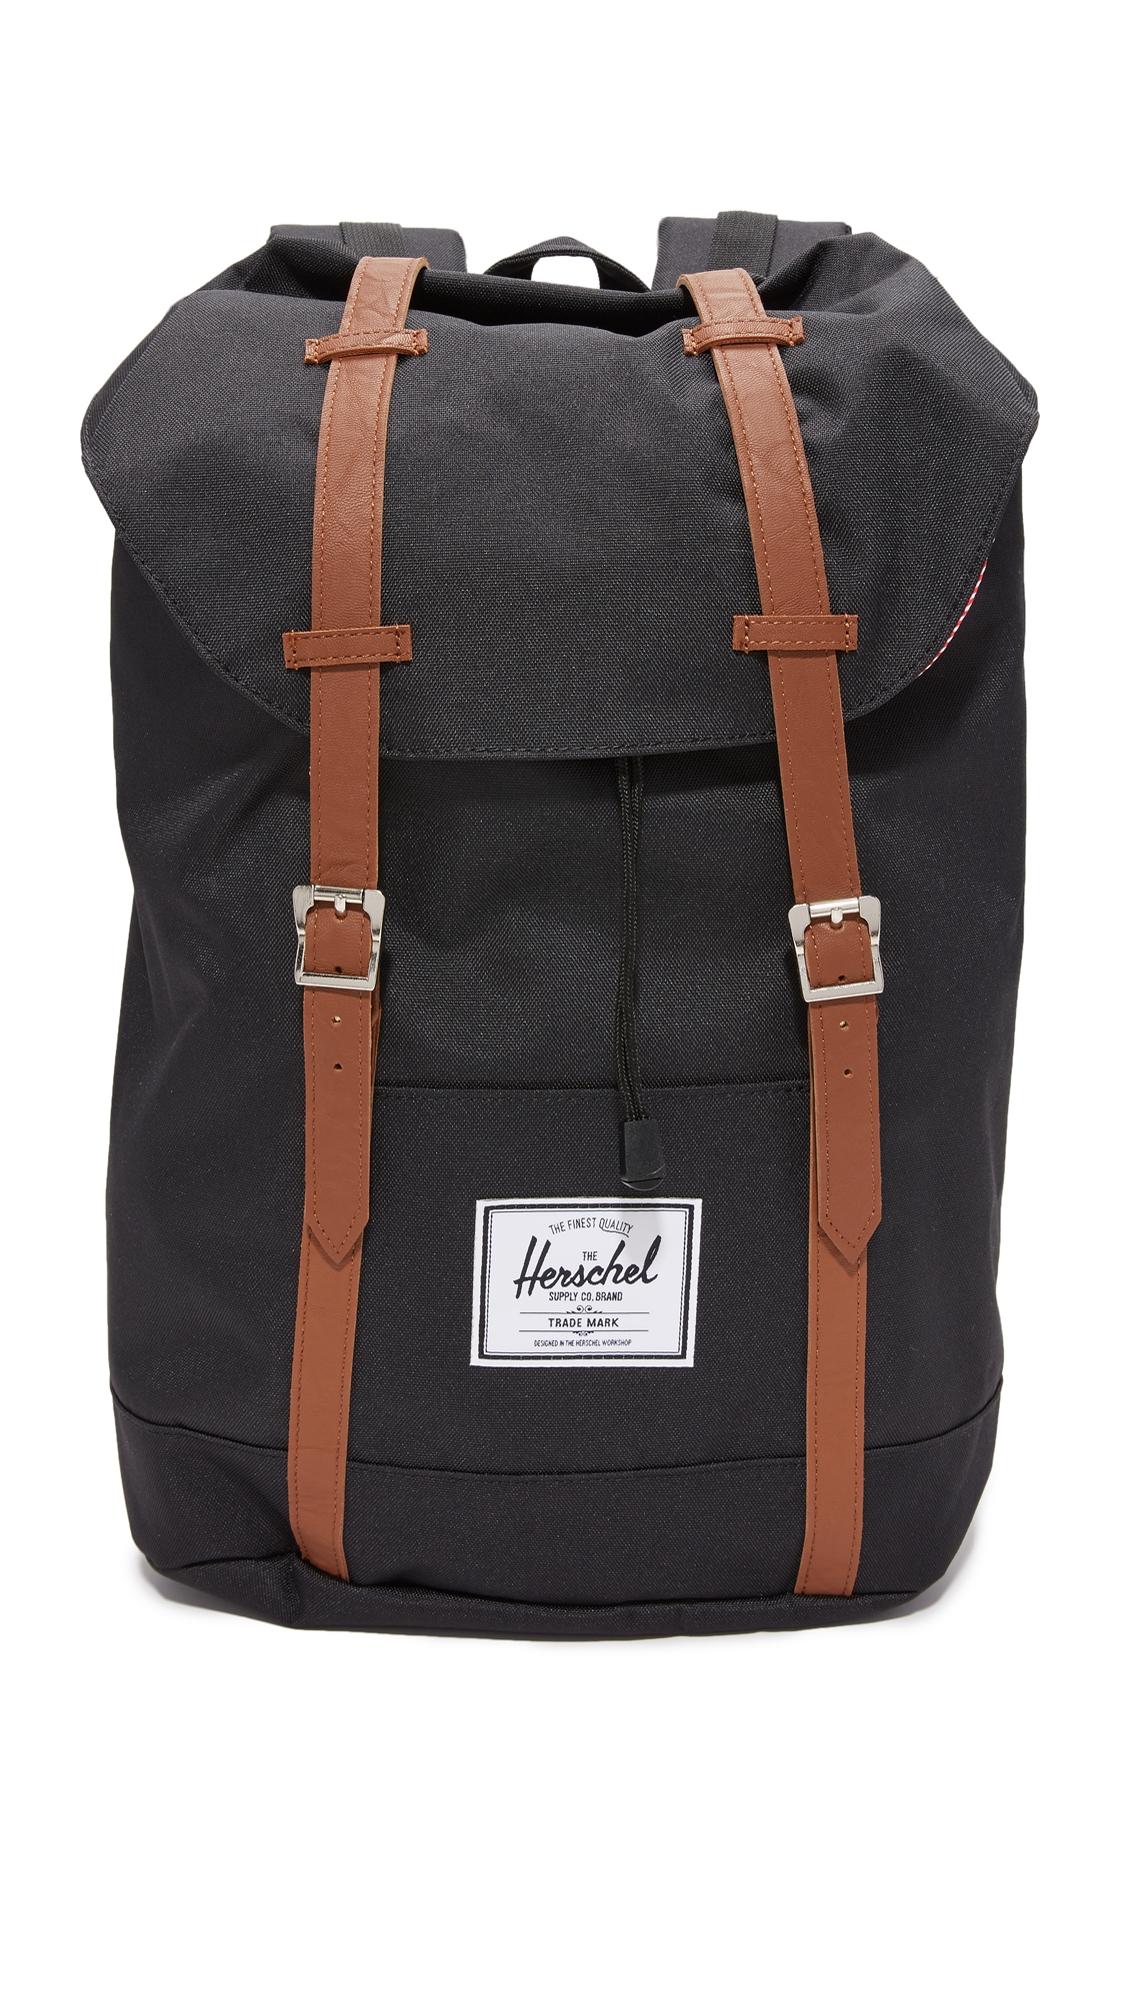 Herschel Supply Co. Fleece 'retreat' Backpack in Black/Tan pu (Black ...